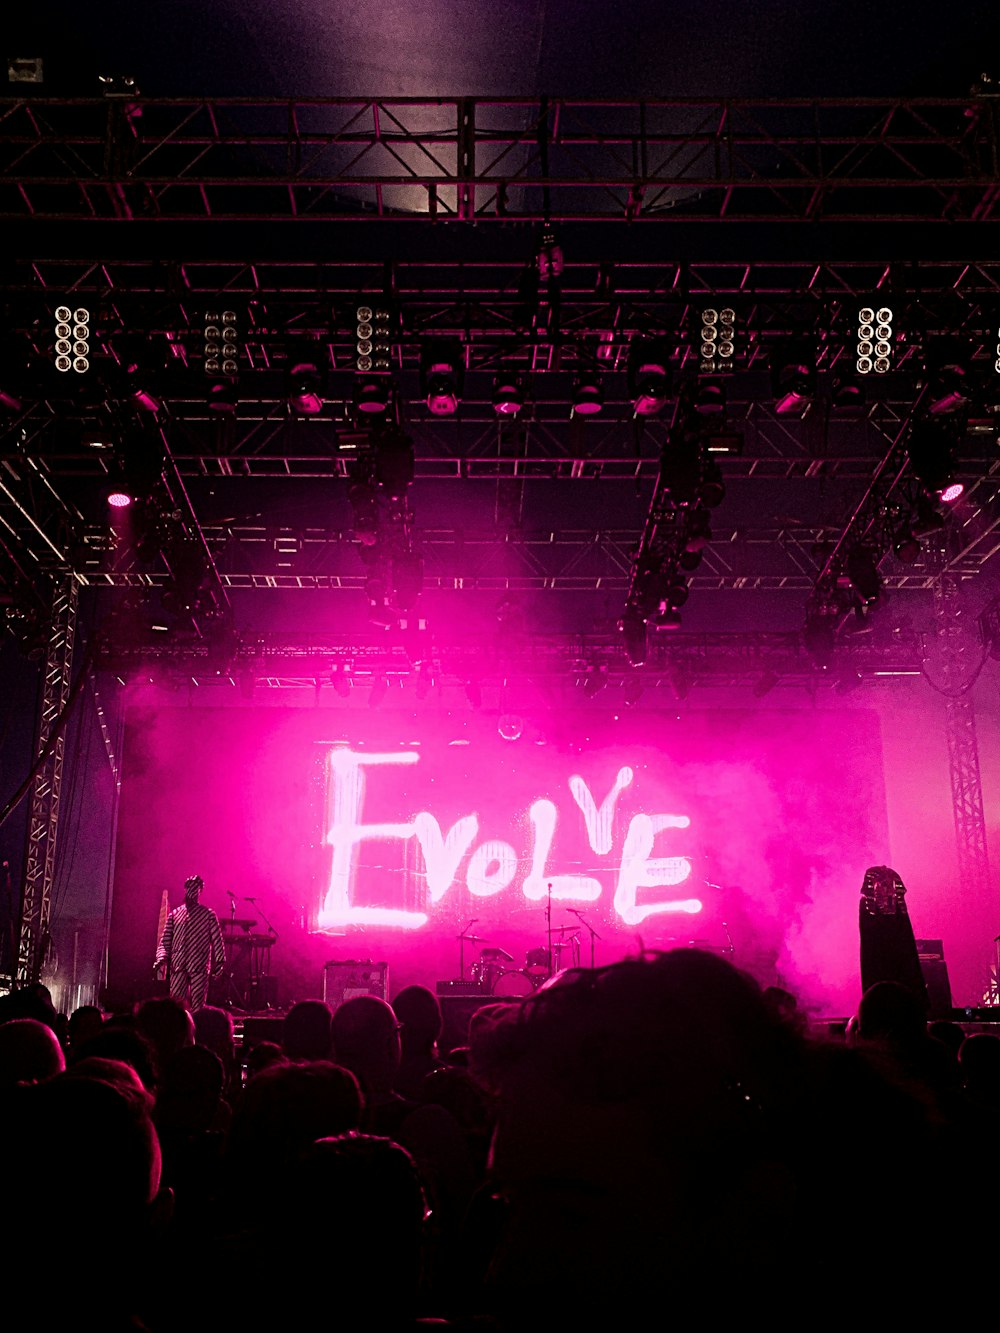 pink Evolve stage neon signage